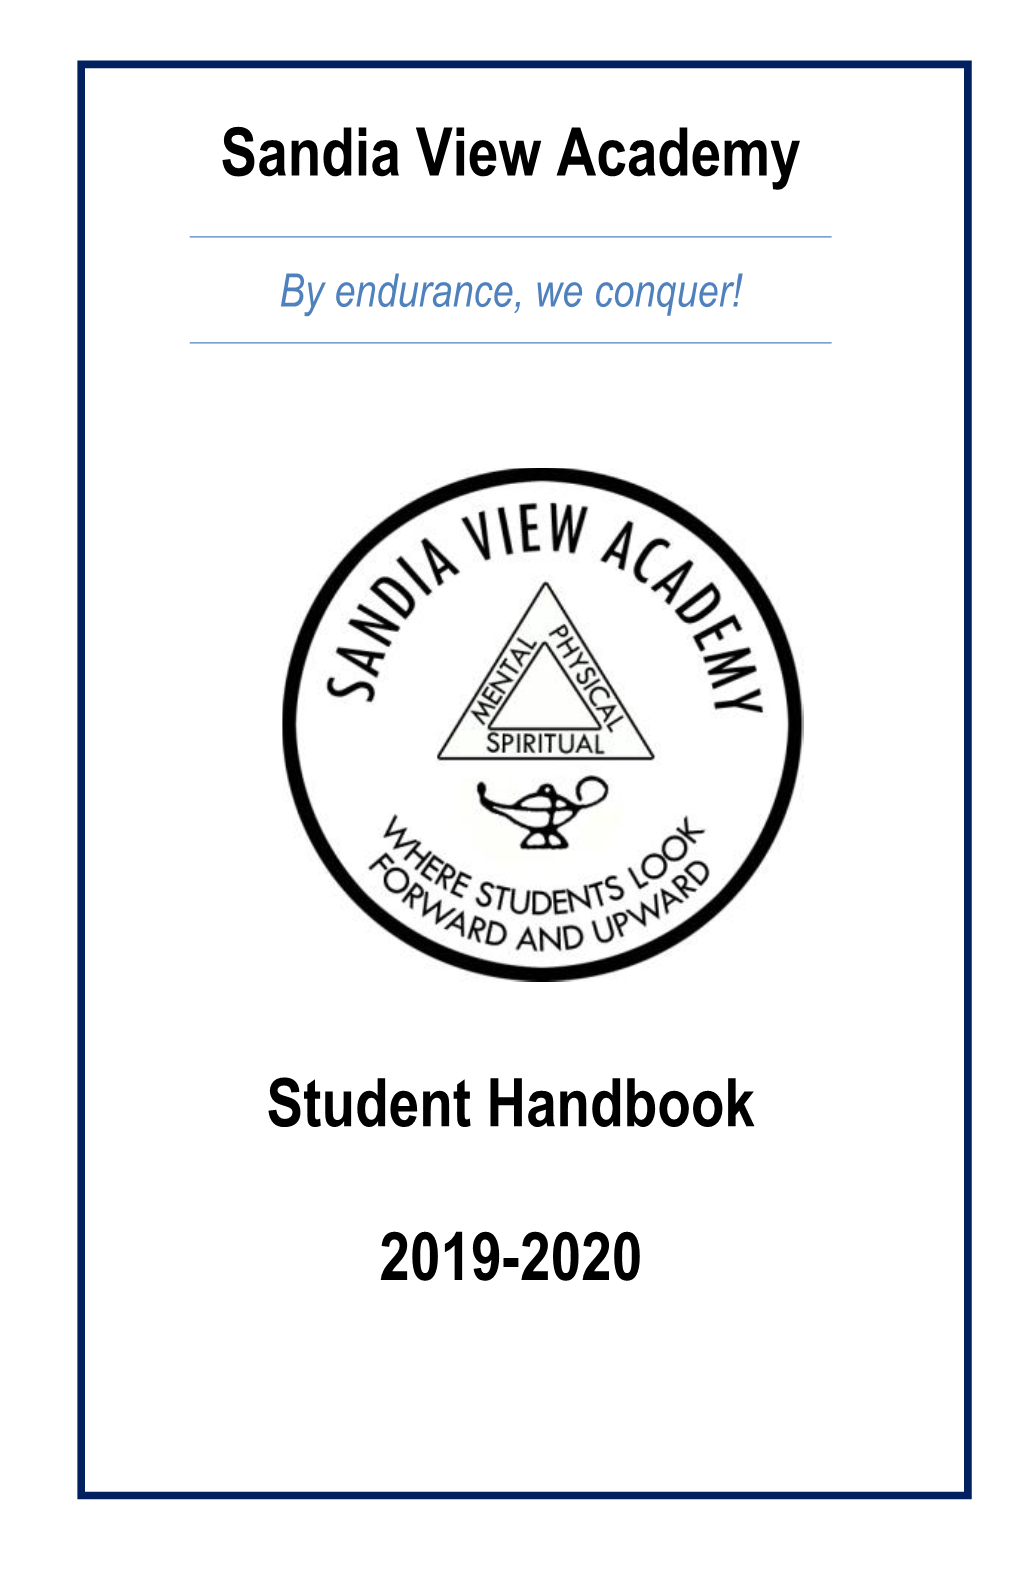 Sandia View Academy Student Handbook 2019-2020